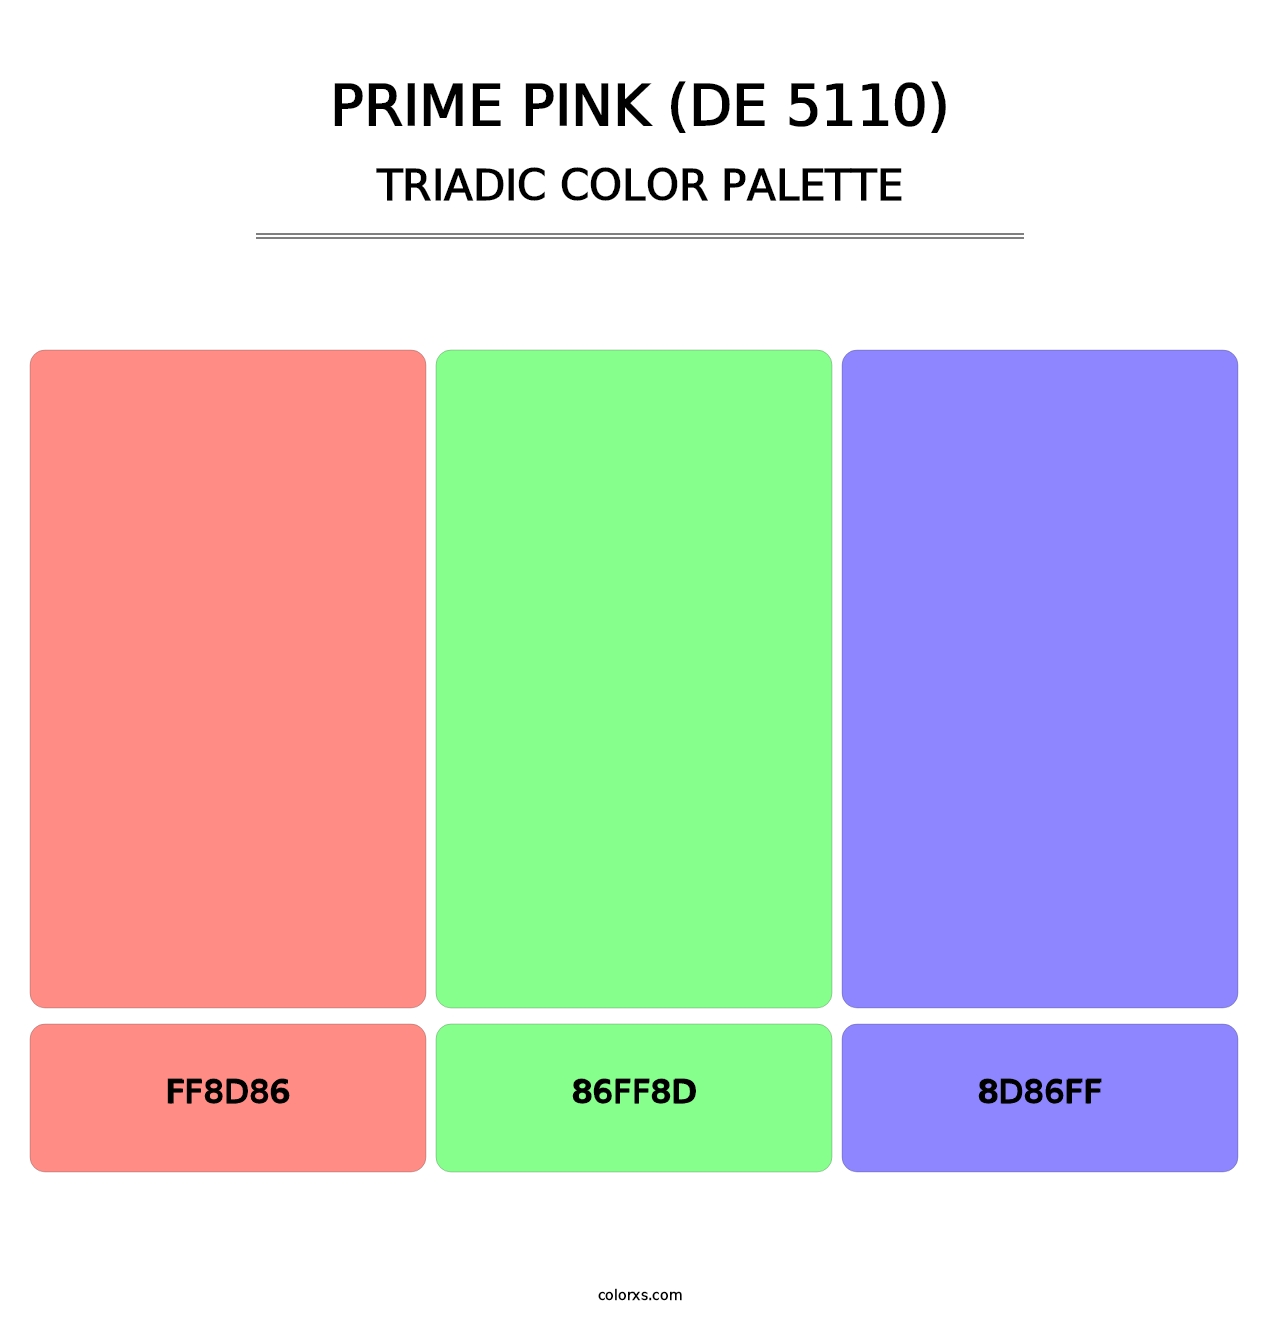 Prime Pink (DE 5110) - Triadic Color Palette